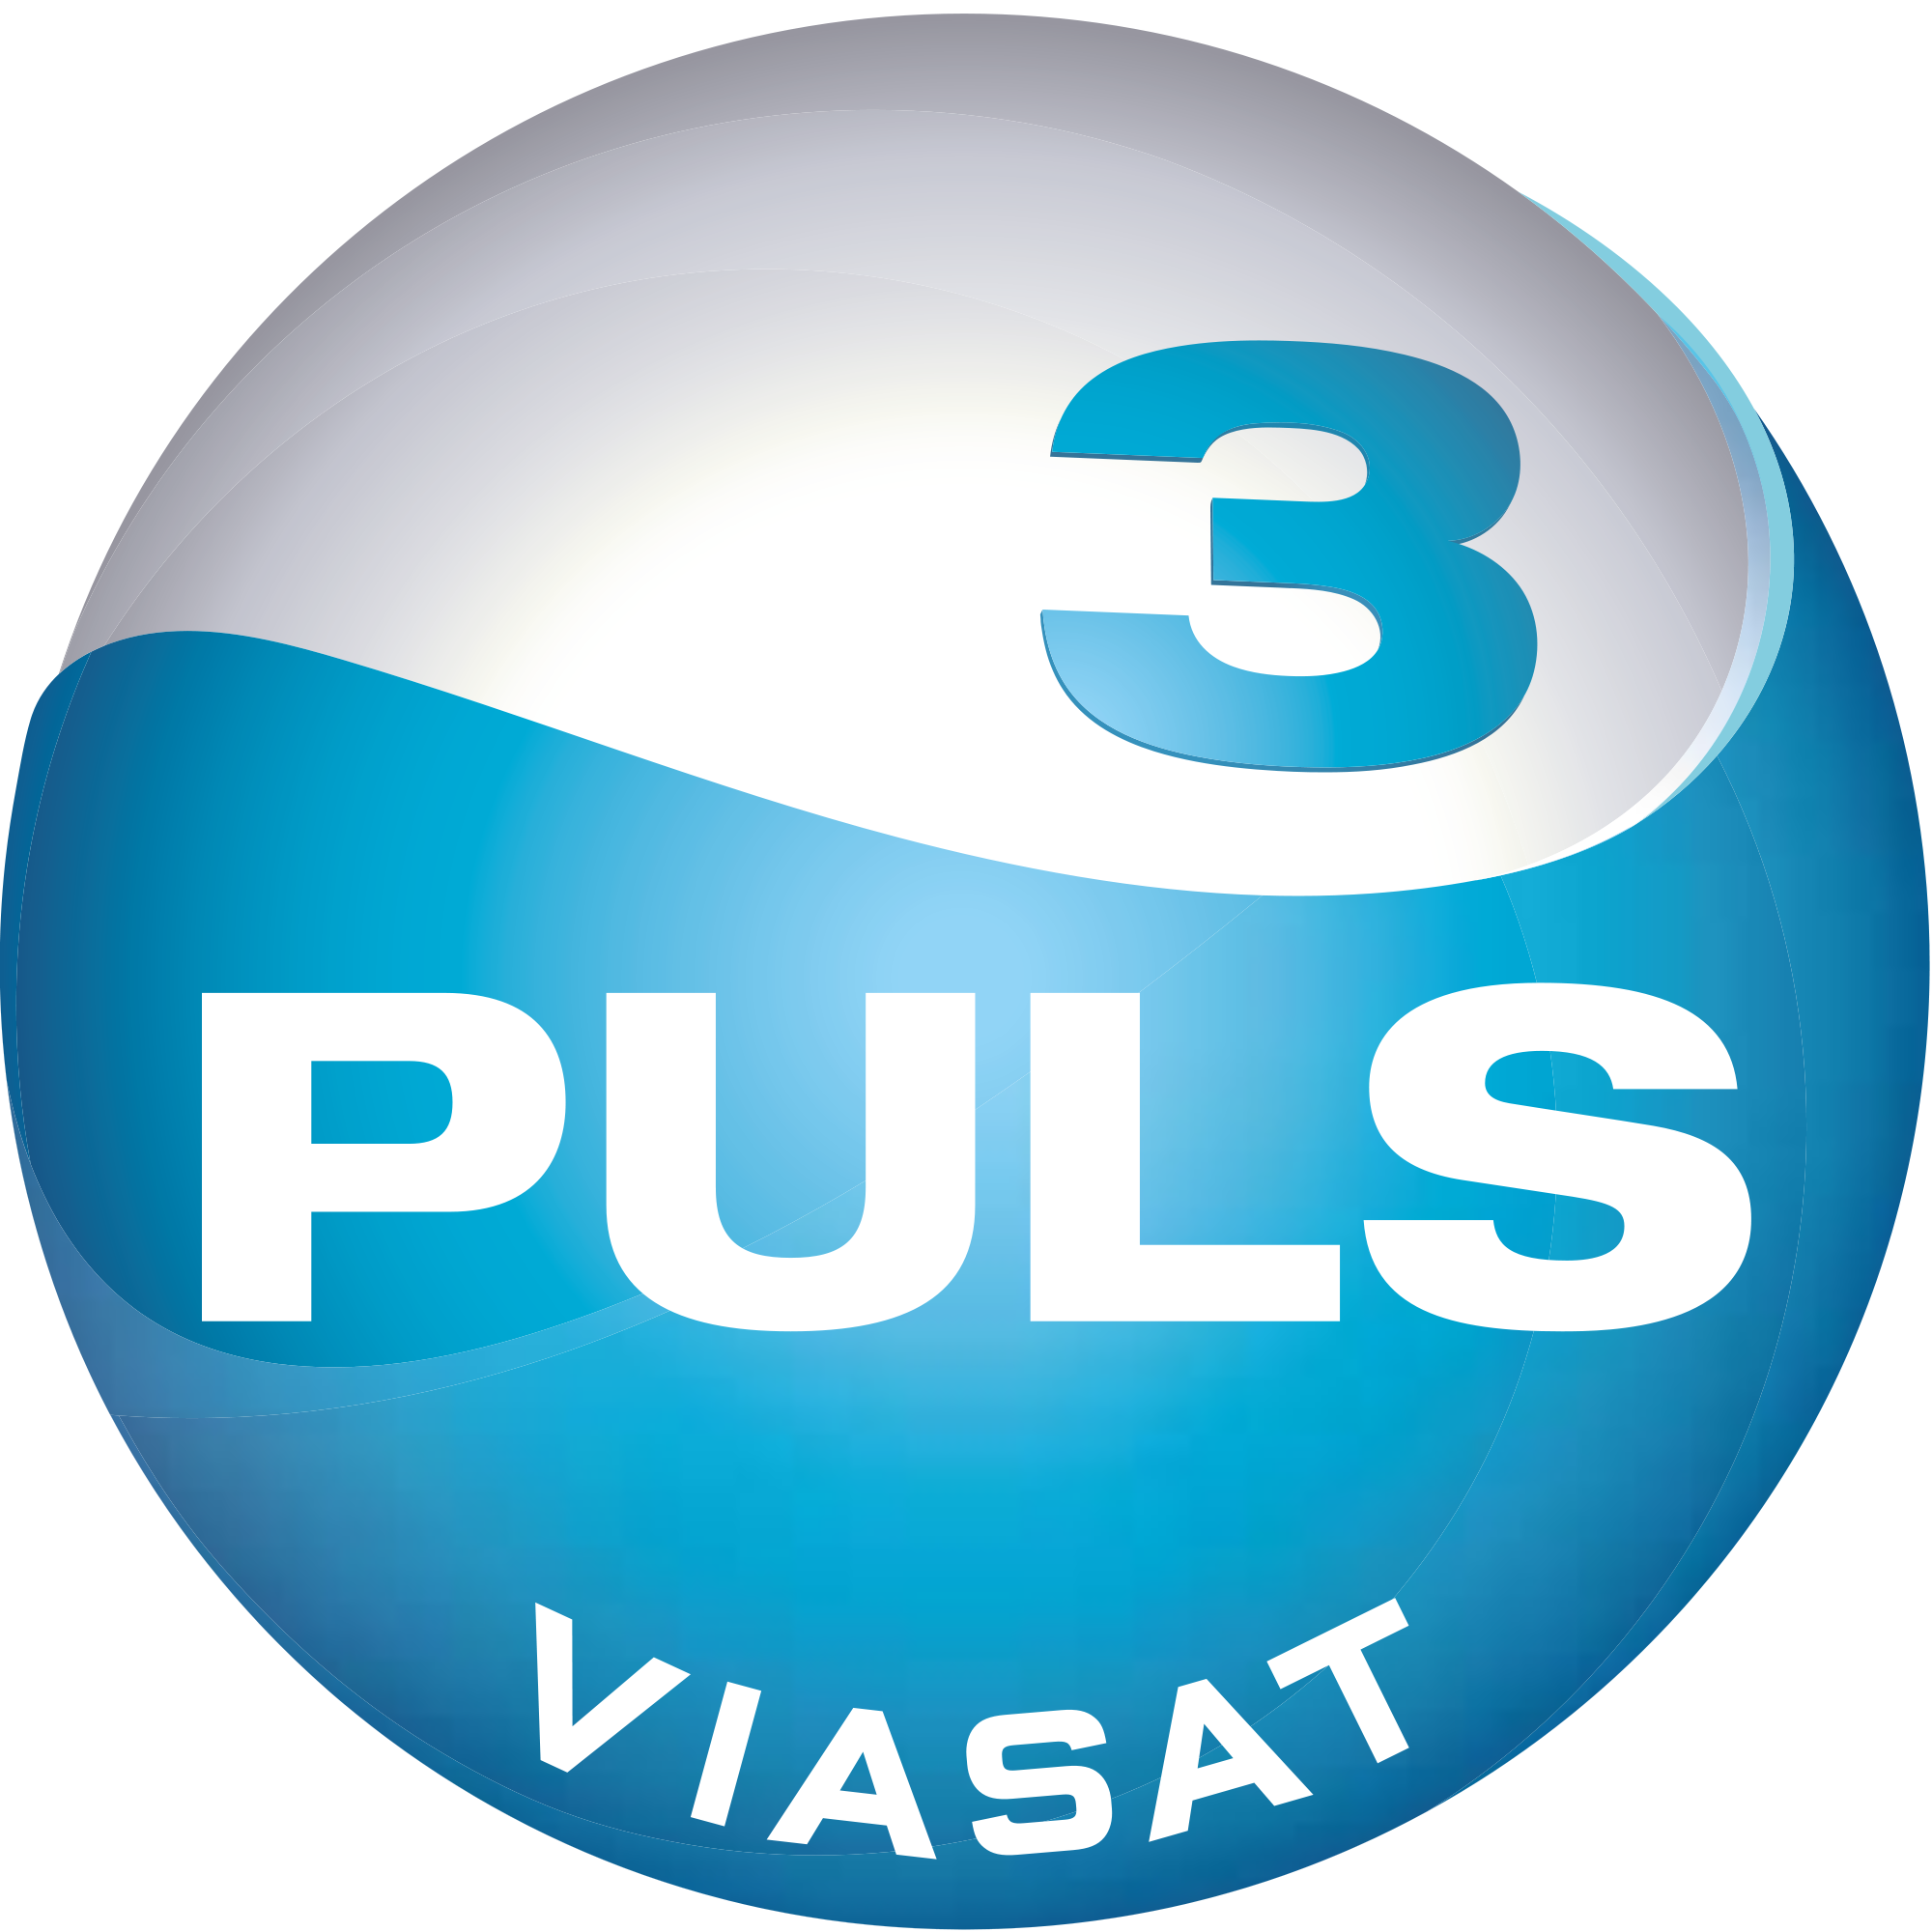 Tv3 3. Tv3 Viasat. Viasat-3. ТВ-ТВ-3. TV puls.